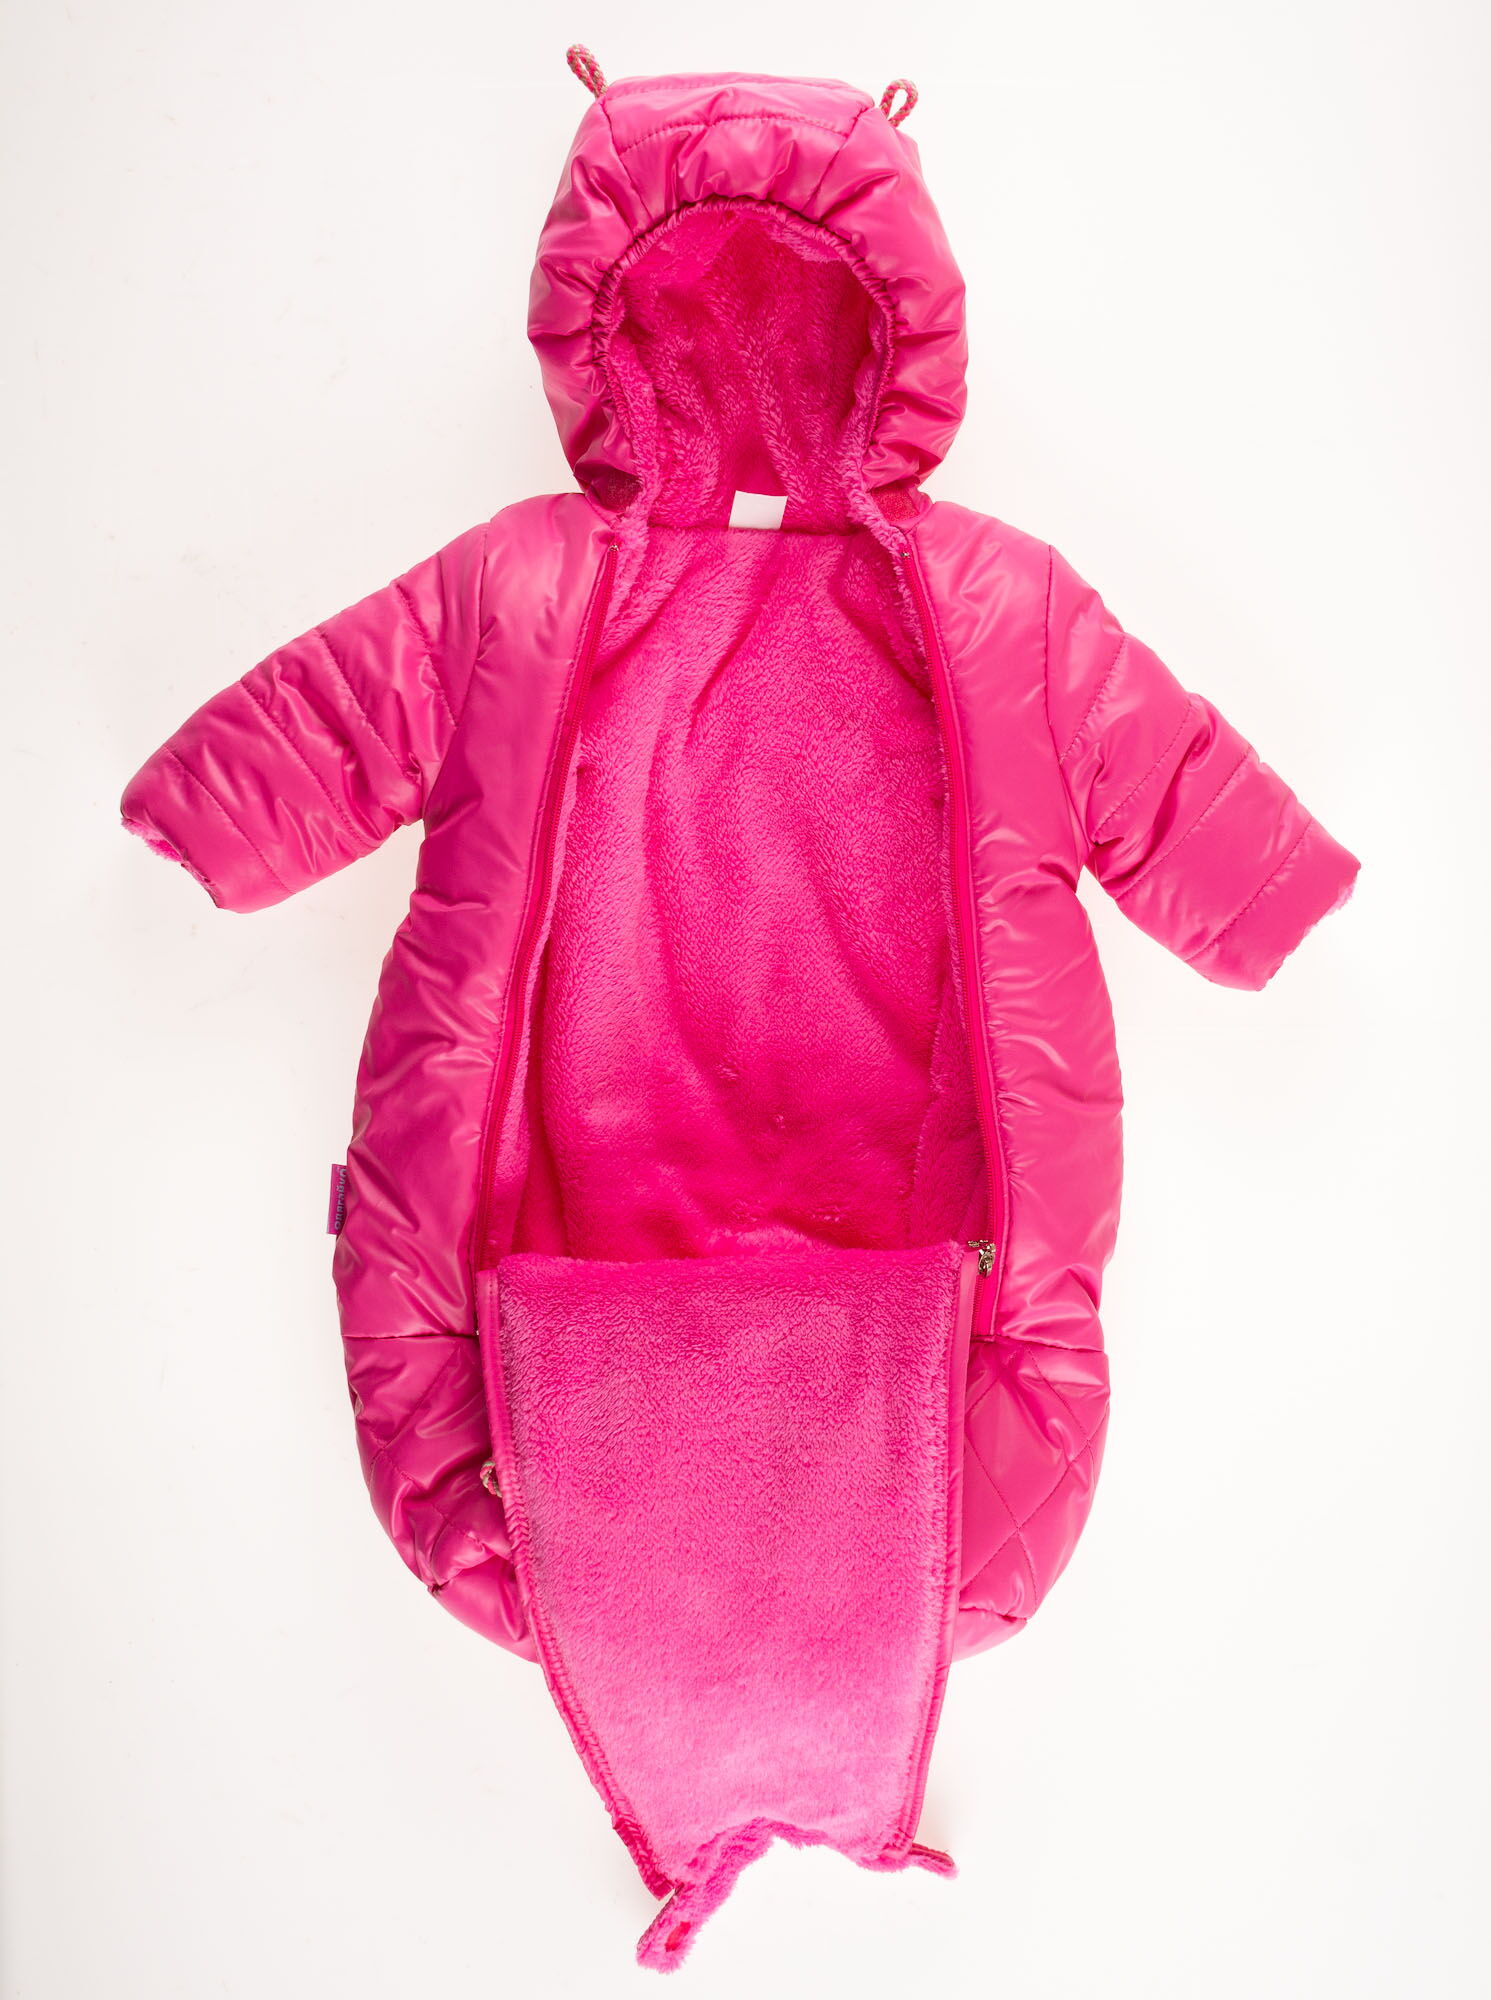 Конверт зимний для девочки Одягайко розовый 3204О - фото